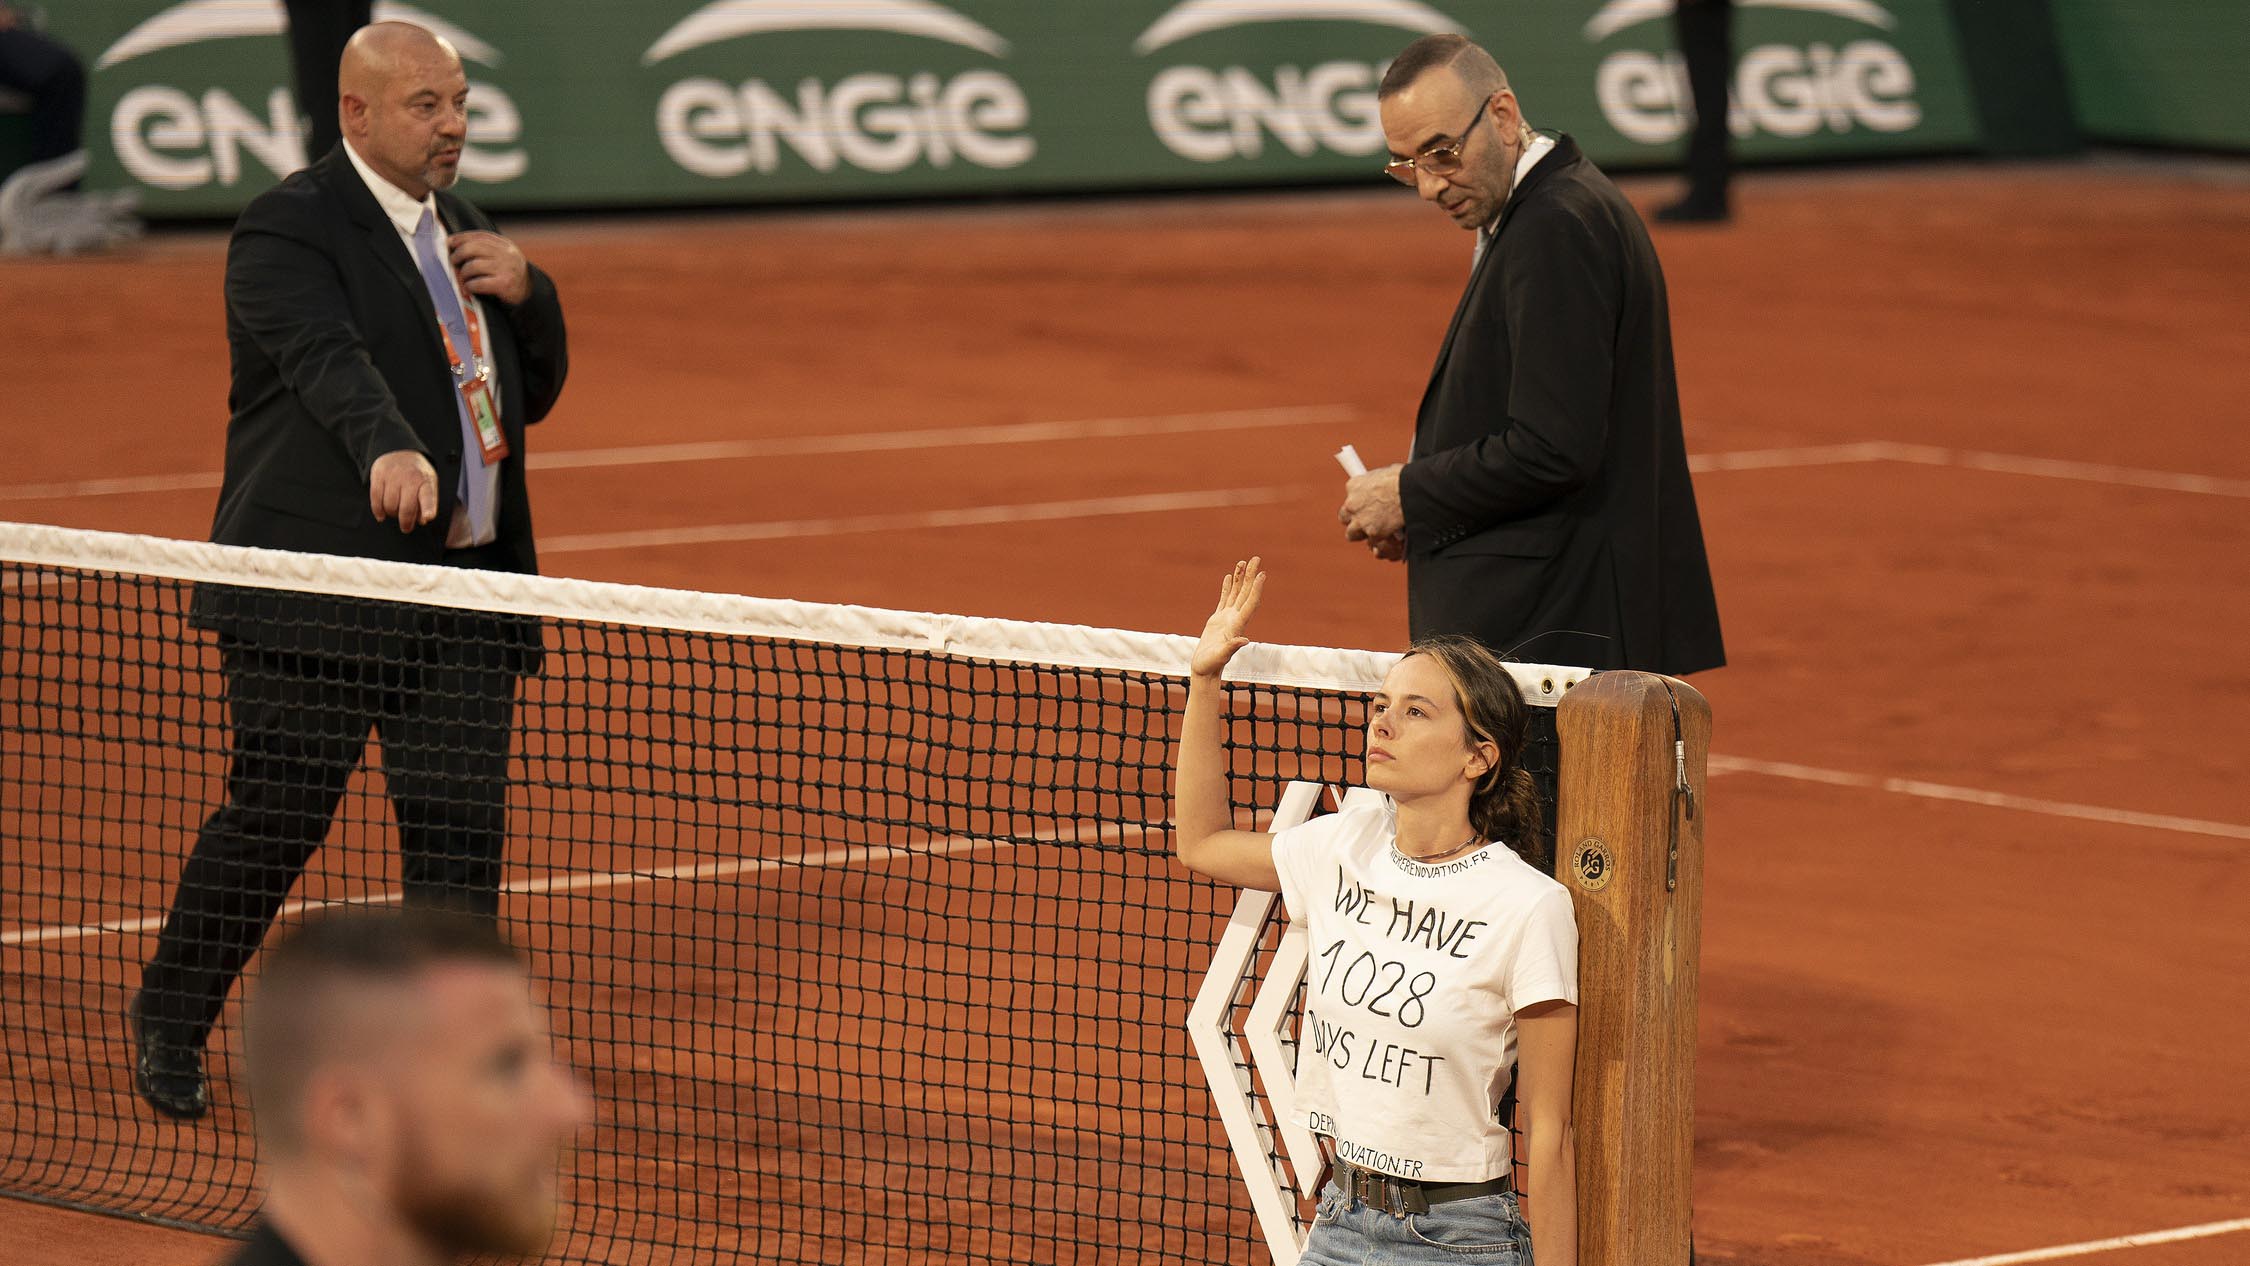 Protest Interrupts Casper Ruud – Marin Cilic French Open Semifinal